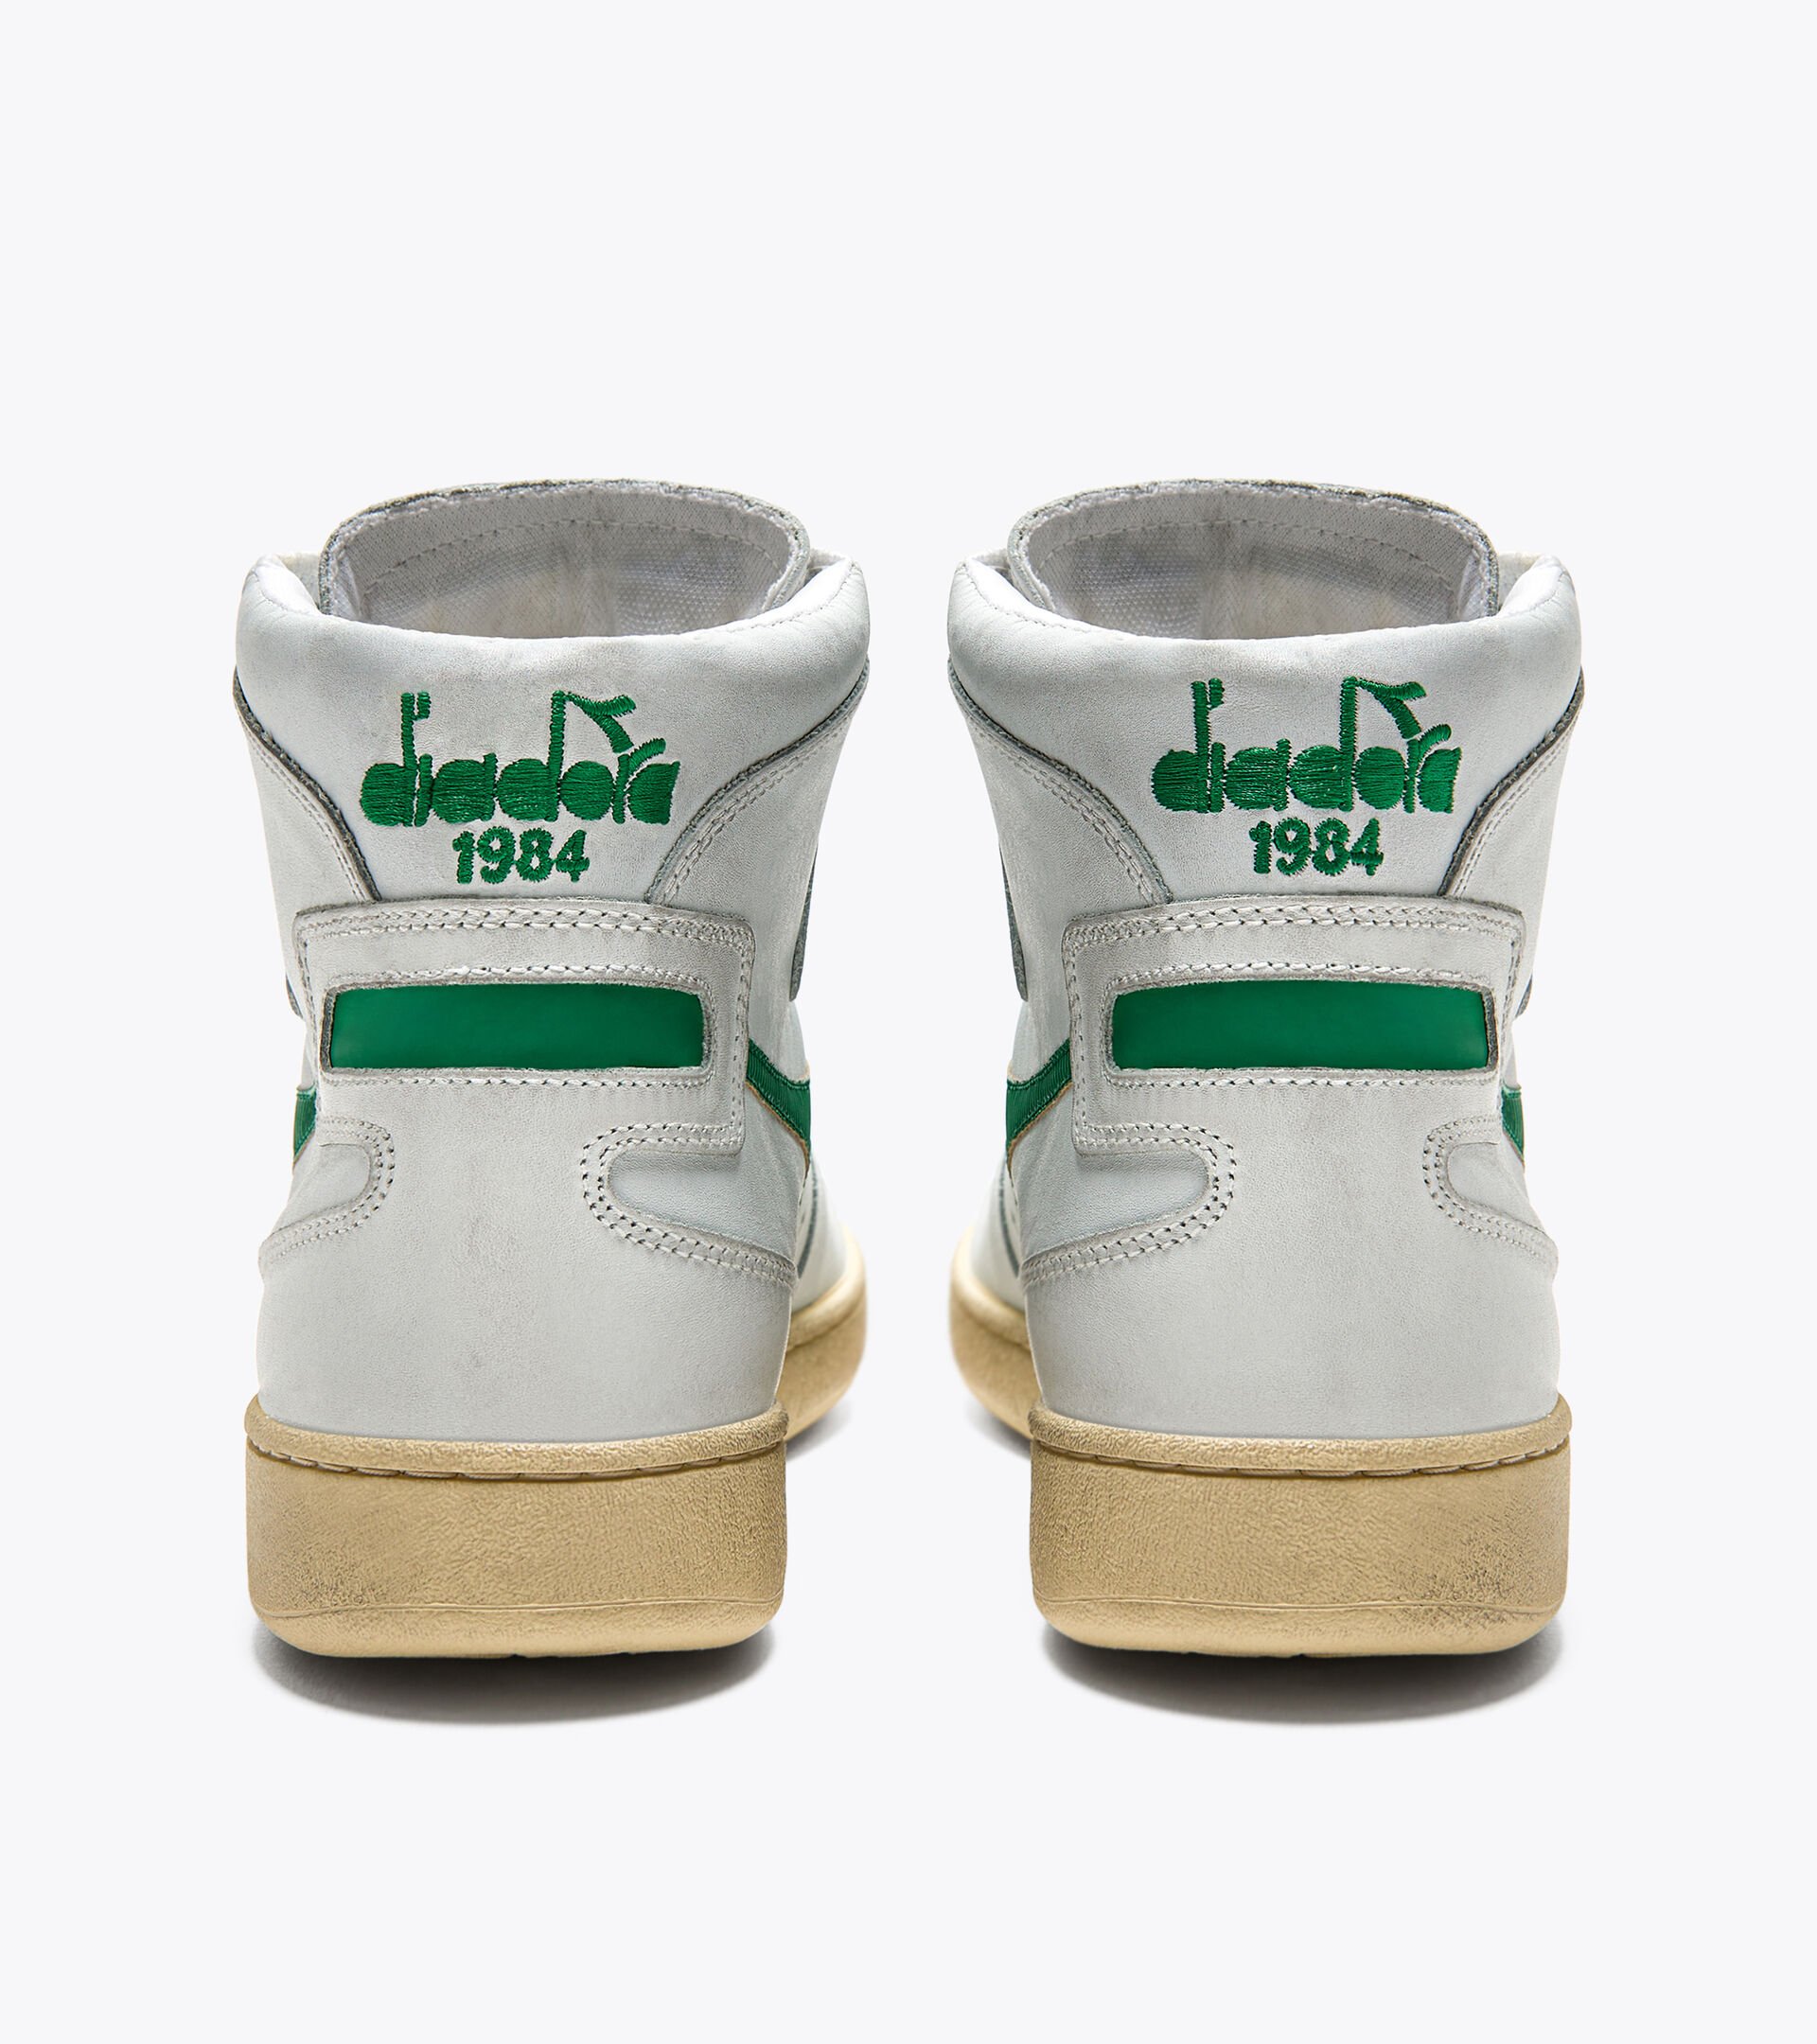 Heritage shoe - Gender Neutral MI BASKET USED WHITE/VERDANT GREEN - Diadora